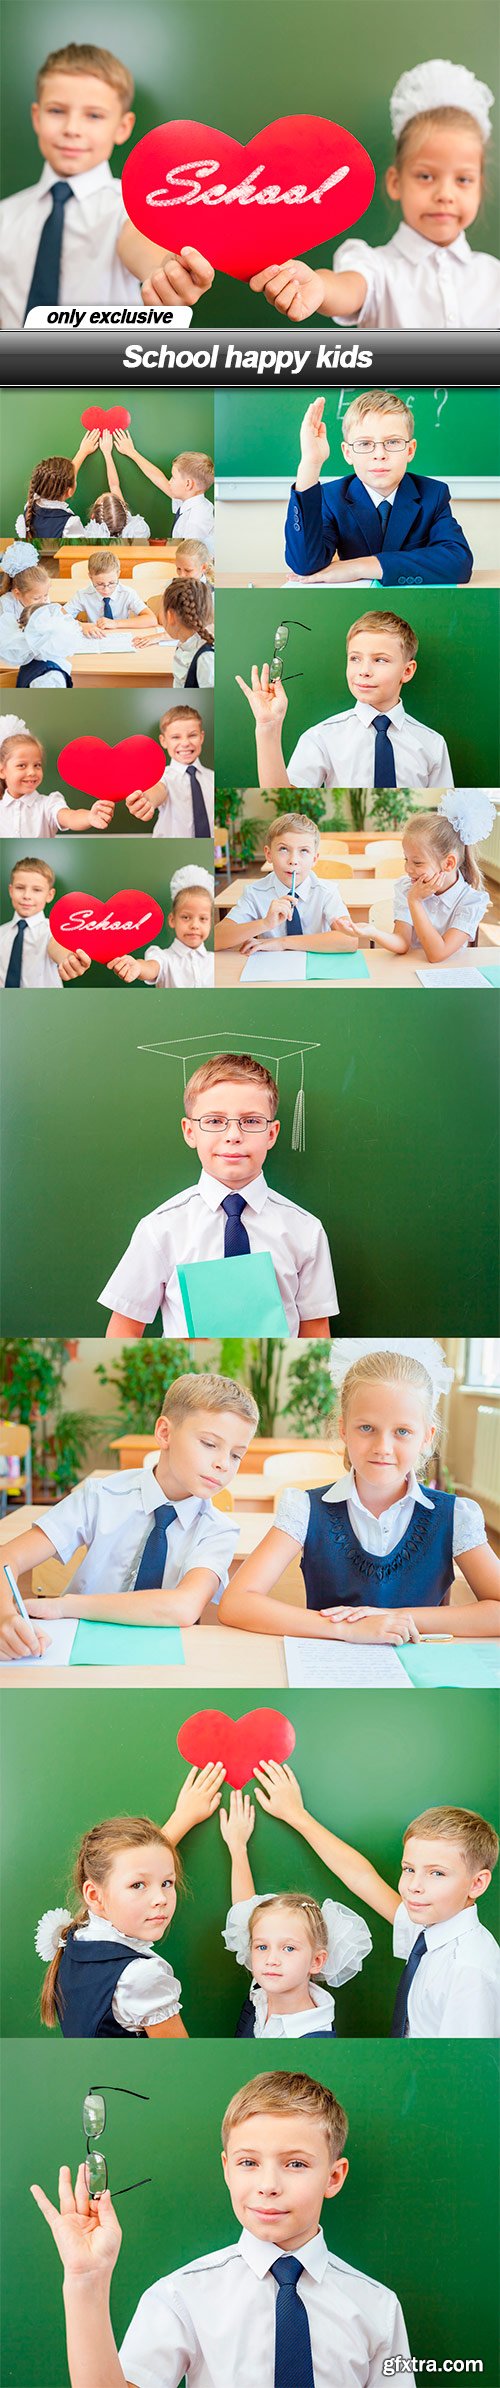 School happy kids - 11 UHQ JPEG